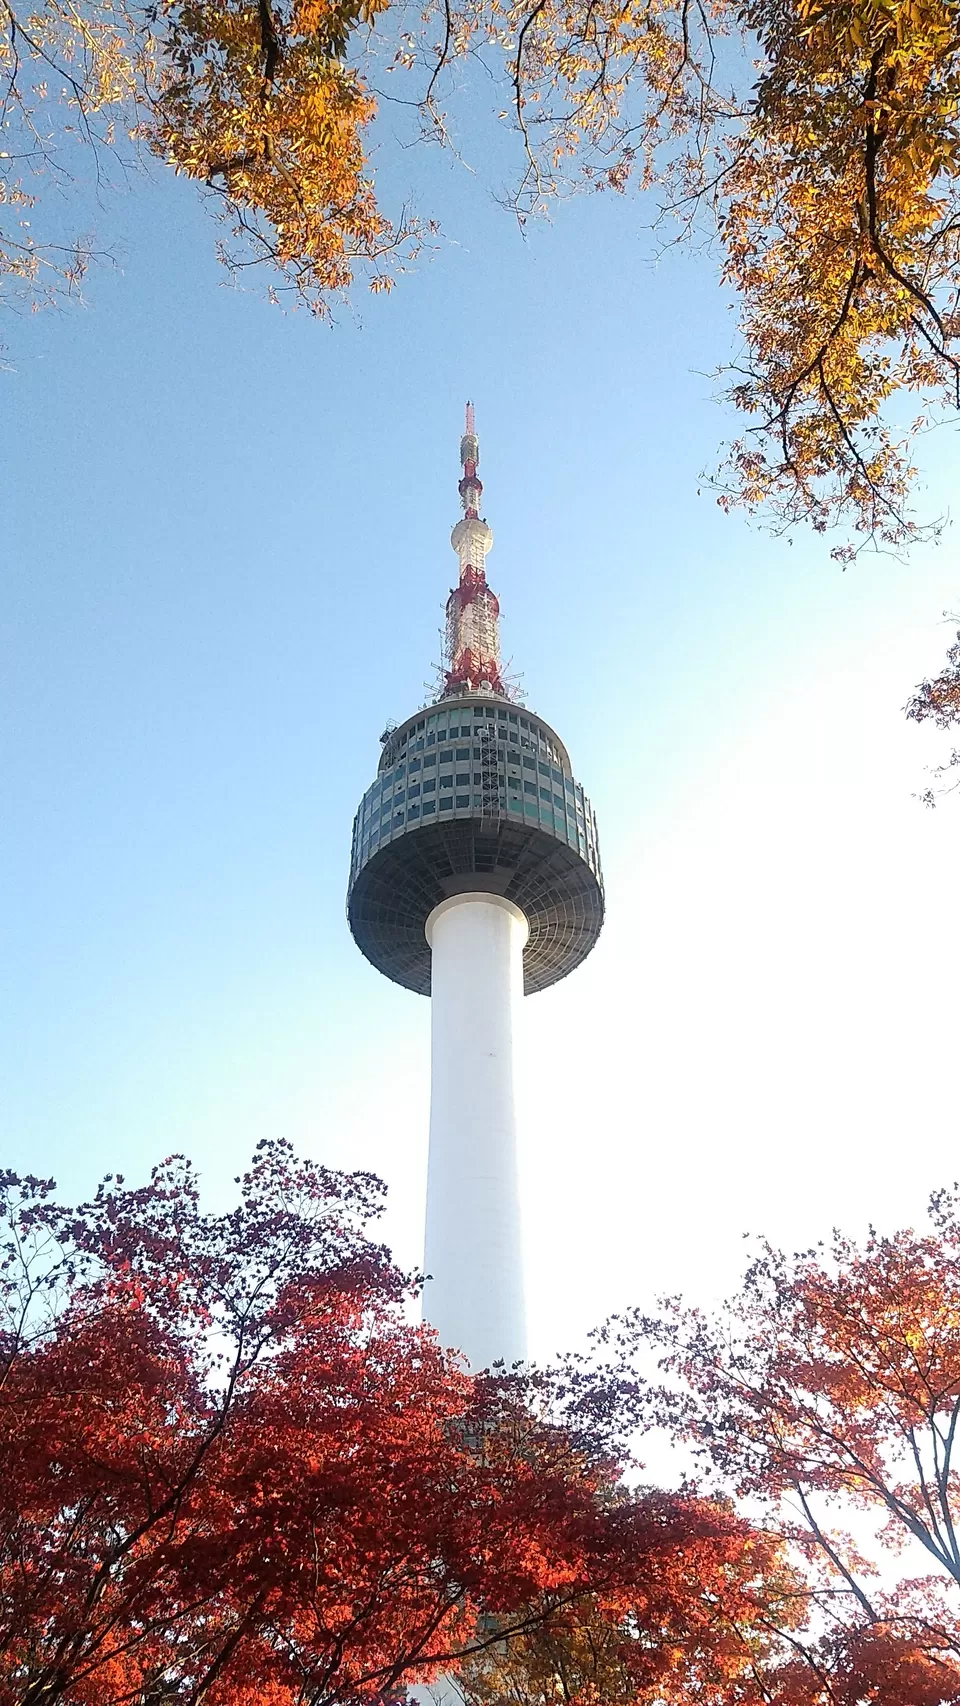 Photo of Namsan Tower, Namsangongwon-gil, Yongsan 2(i)ga-dong, Yongsan-gu, Seoul, South Korea by Sagar Pradhan